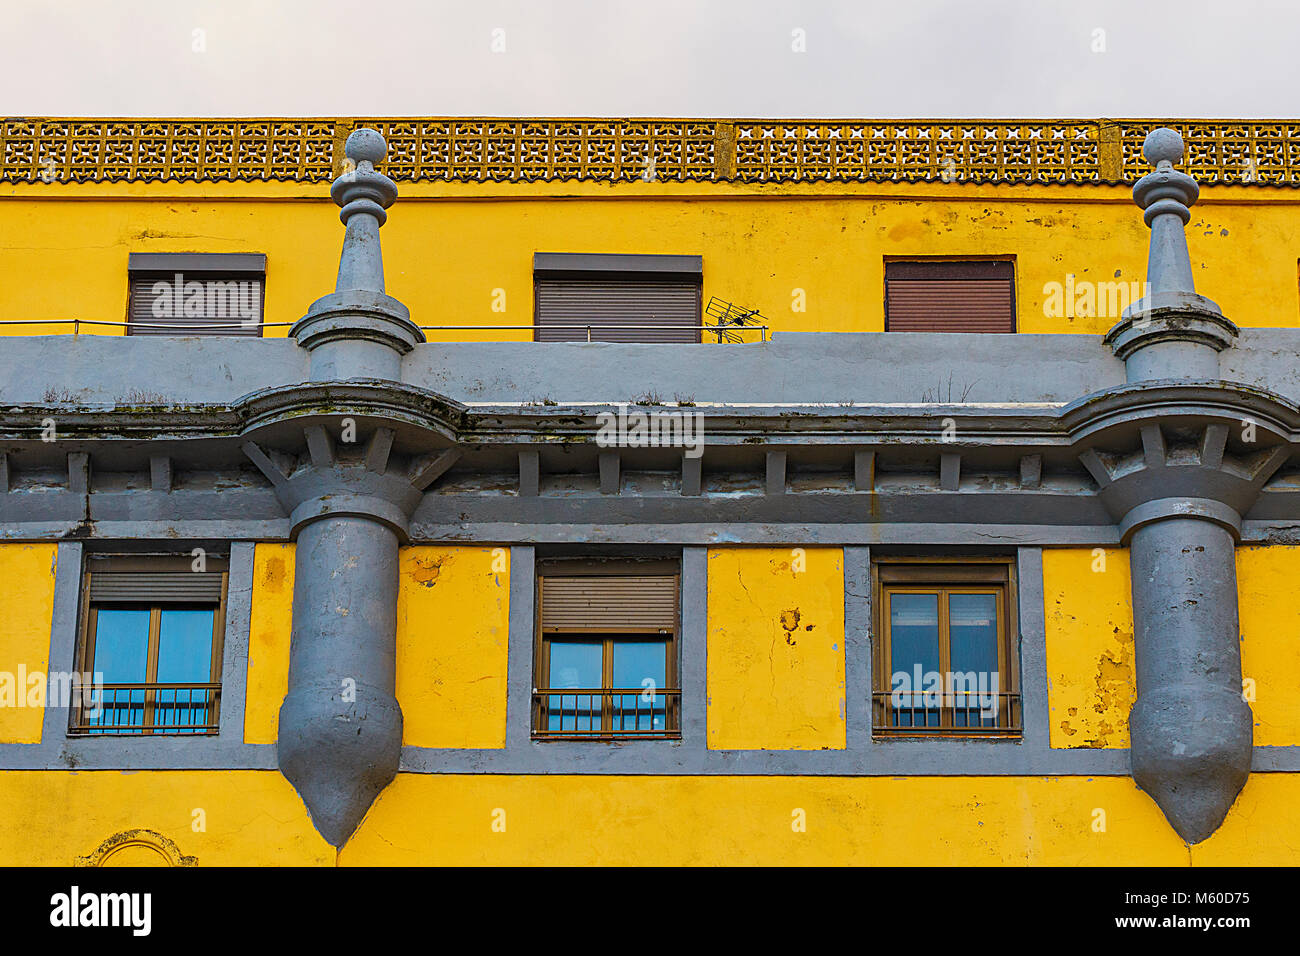 yellow house near the zurriola beach in gros, san sebastian-spain Stock Photo